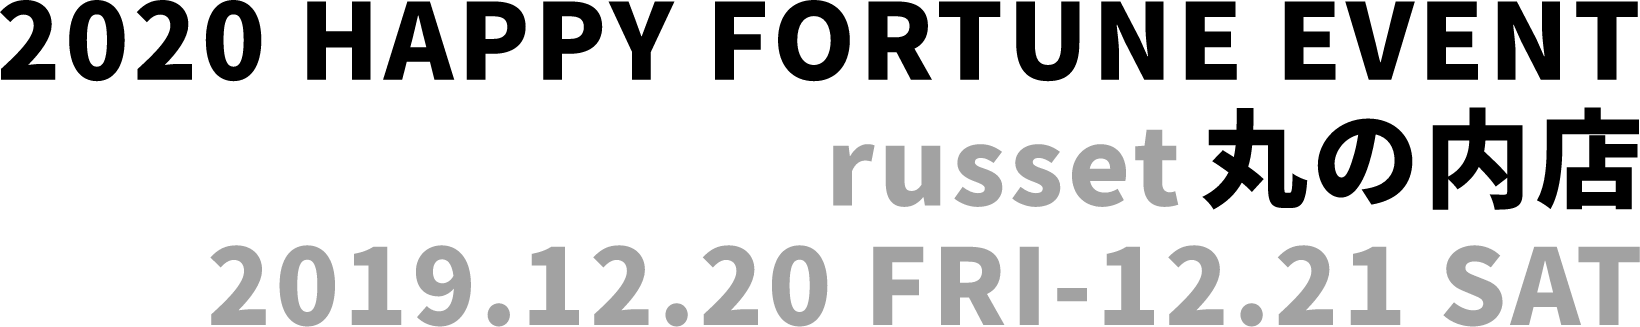 2020 HAPPY FORTUNE EVENT russet 丸の内店 2019.12.20 FRI-12.21 SAT